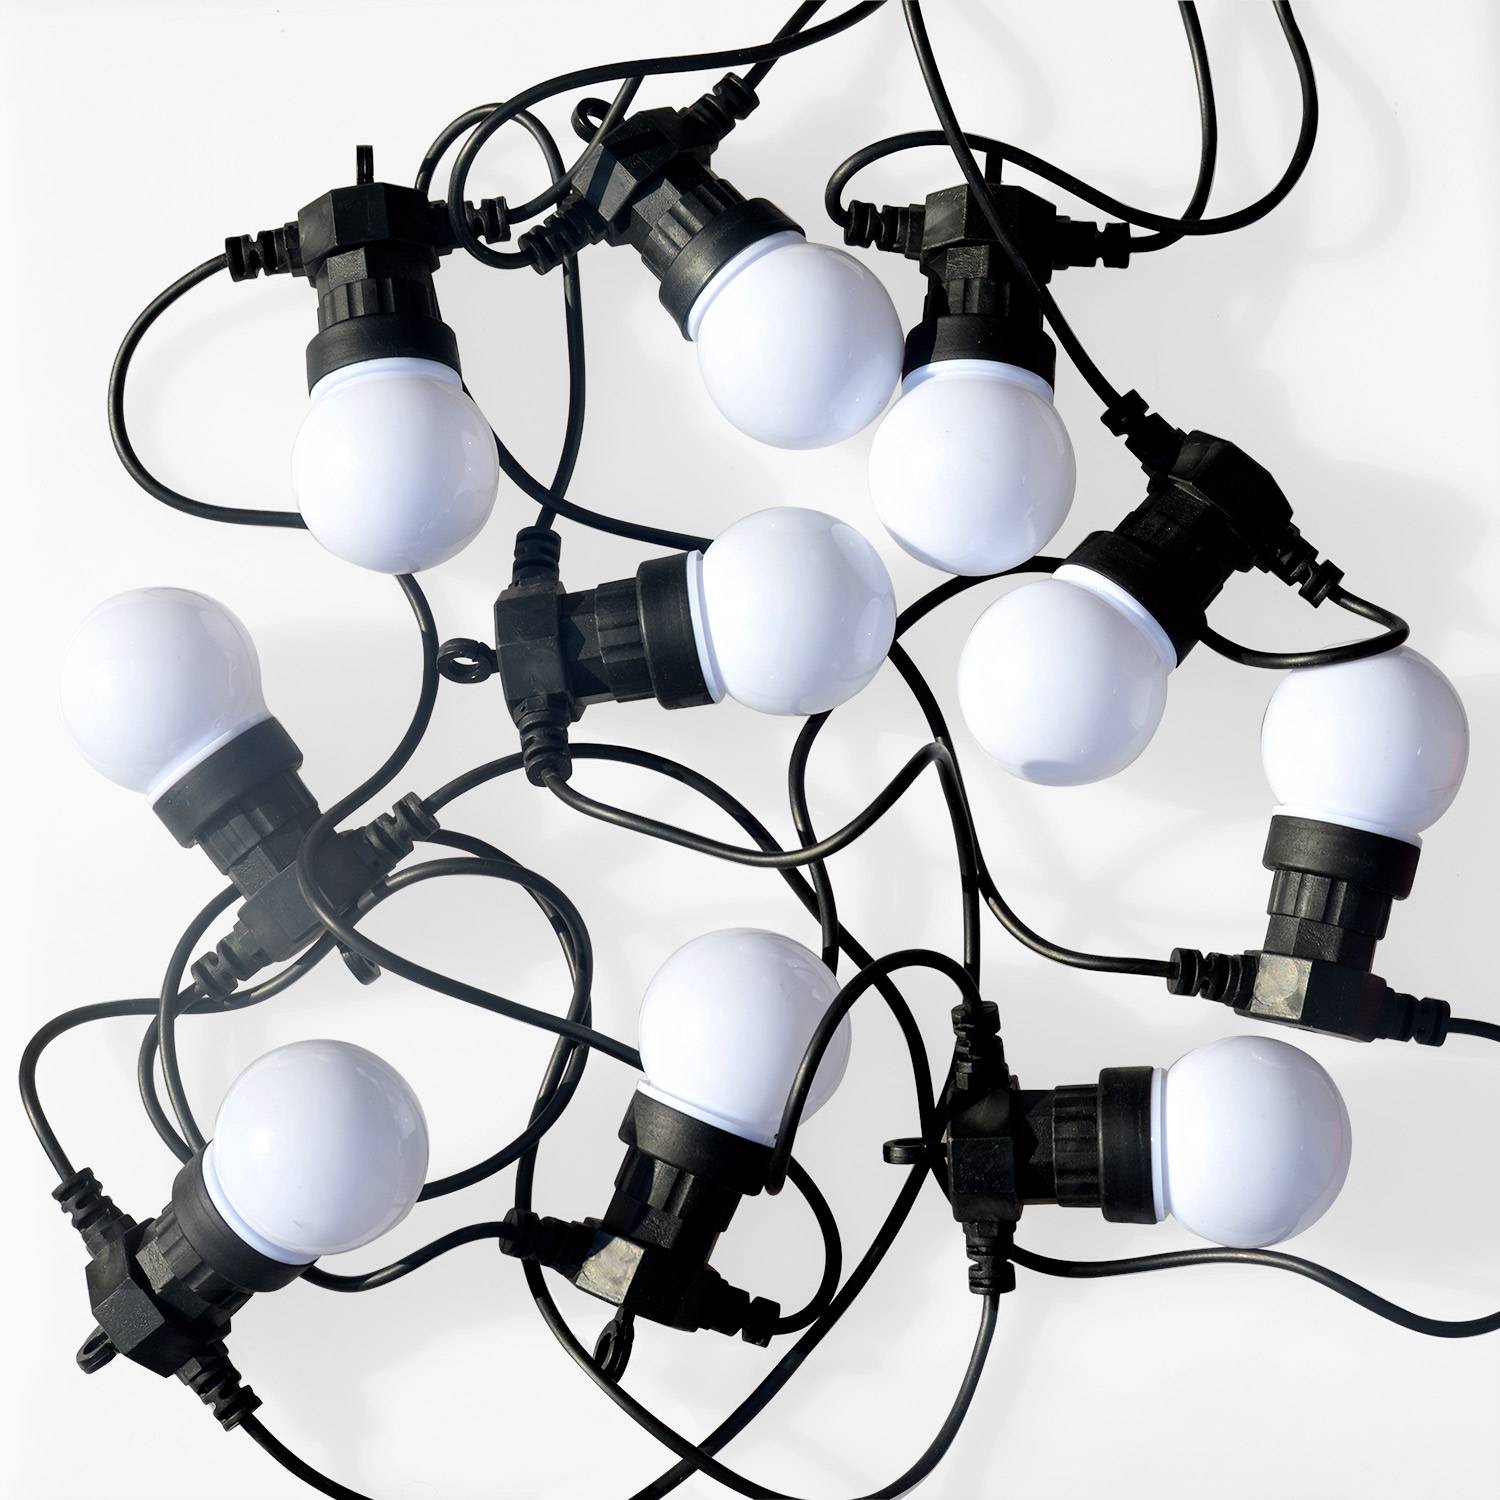 HERACLES - Guirnalda para exterior con 10 bombillas blancas, 50 LED, funciona con pilas, función de temporizador, 8 modos, 4,5 m de largo Photo2